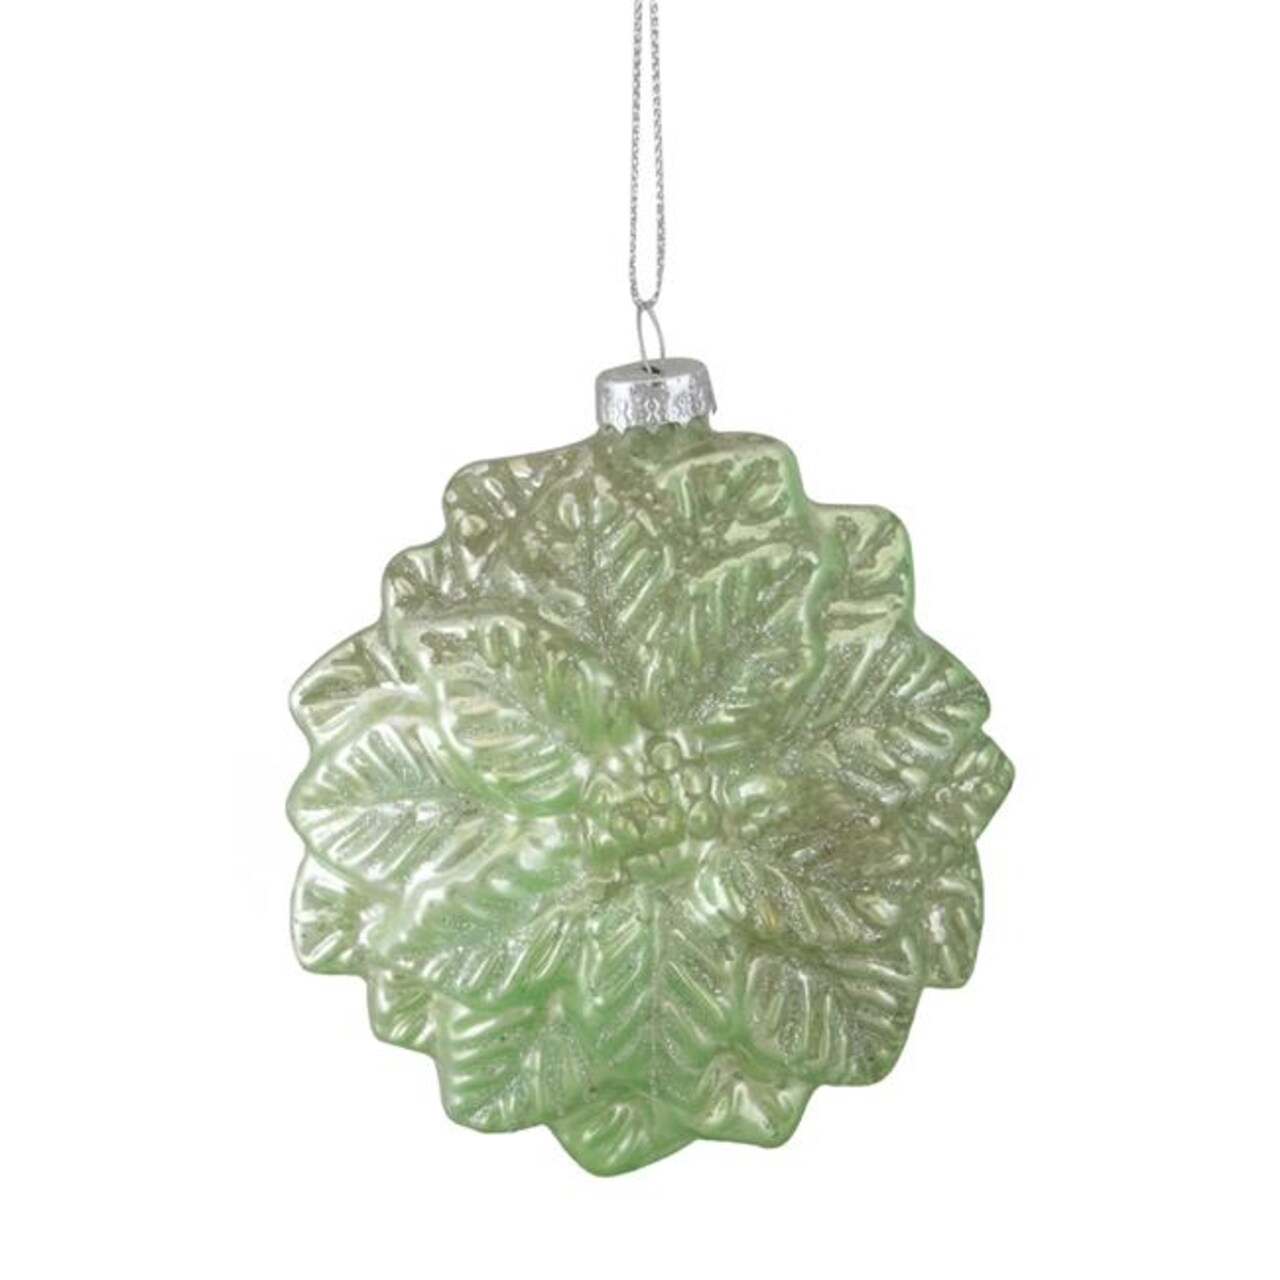 NorthLight 34294729 3.75 in. Glittered Poinsettia Flower Glass Christmas Ornament, Green